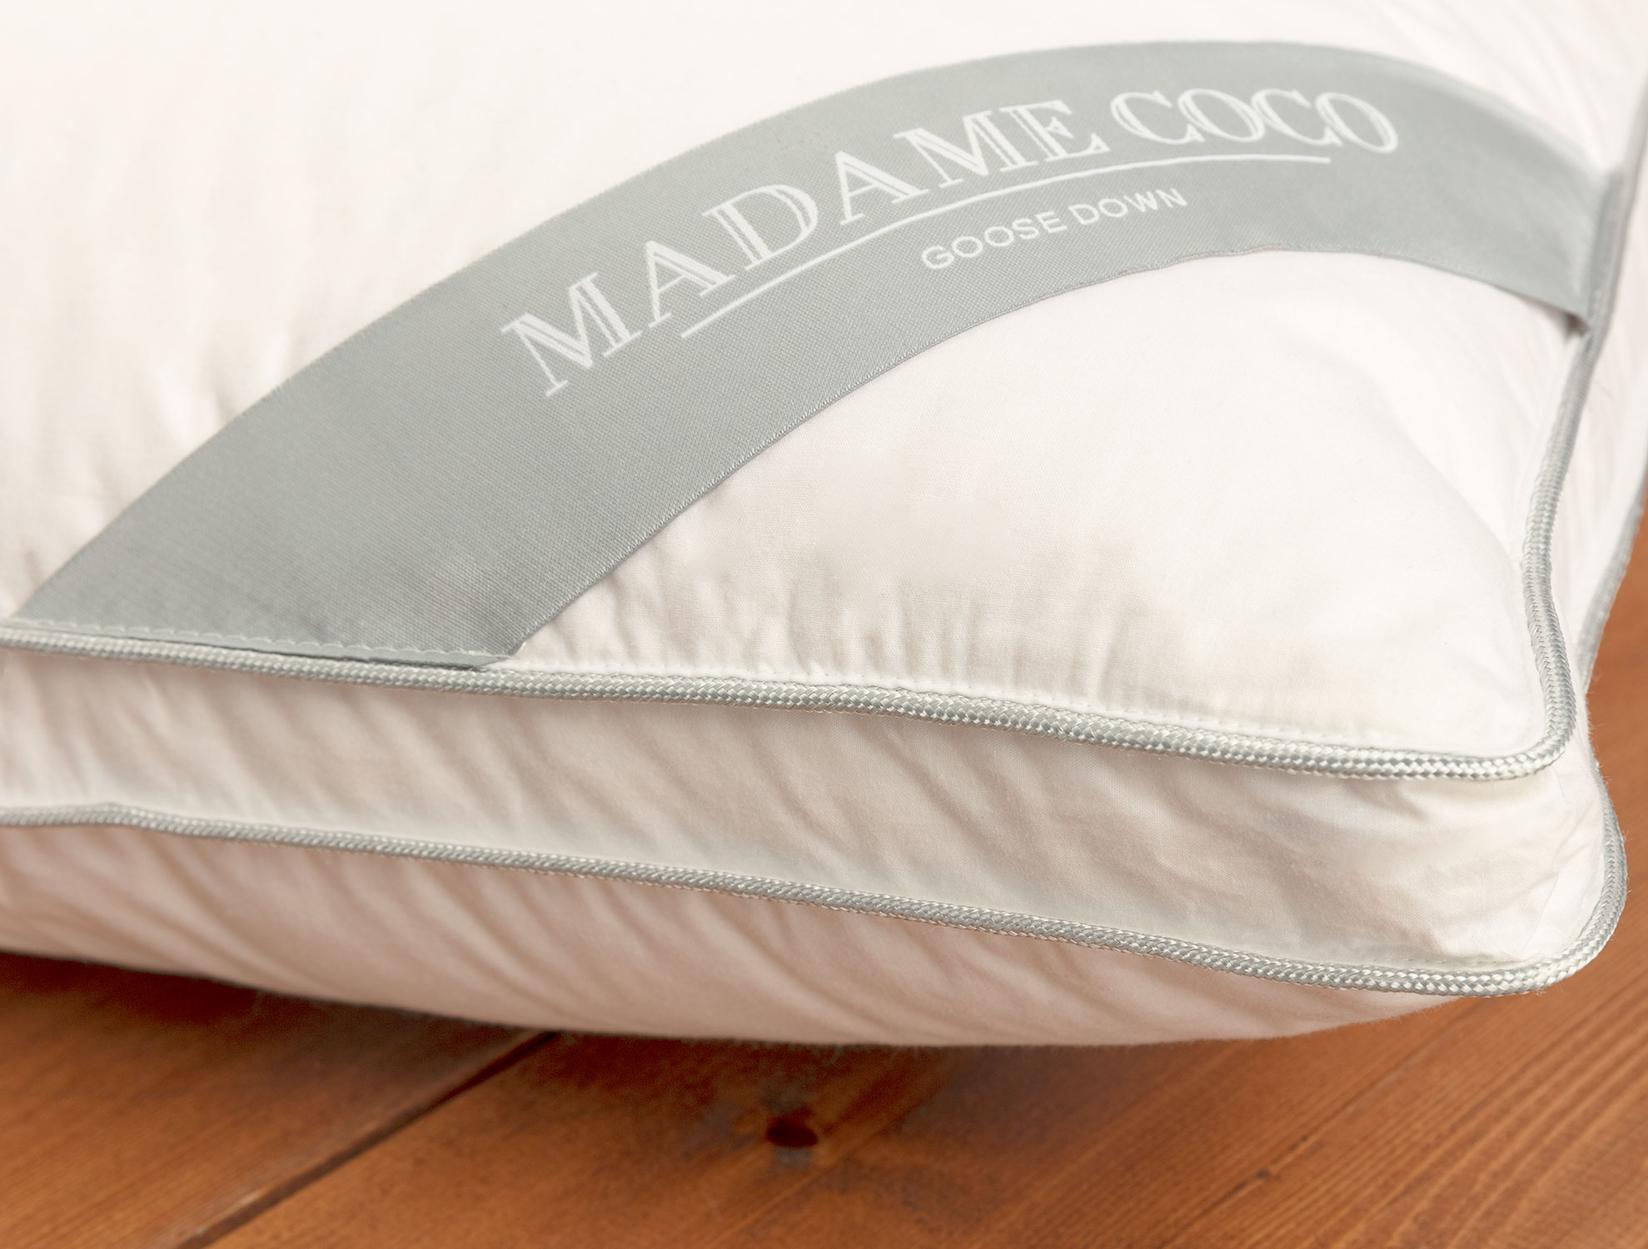 MADAME COCO Jolene Perjani jastuk, 50x70cm, Beli